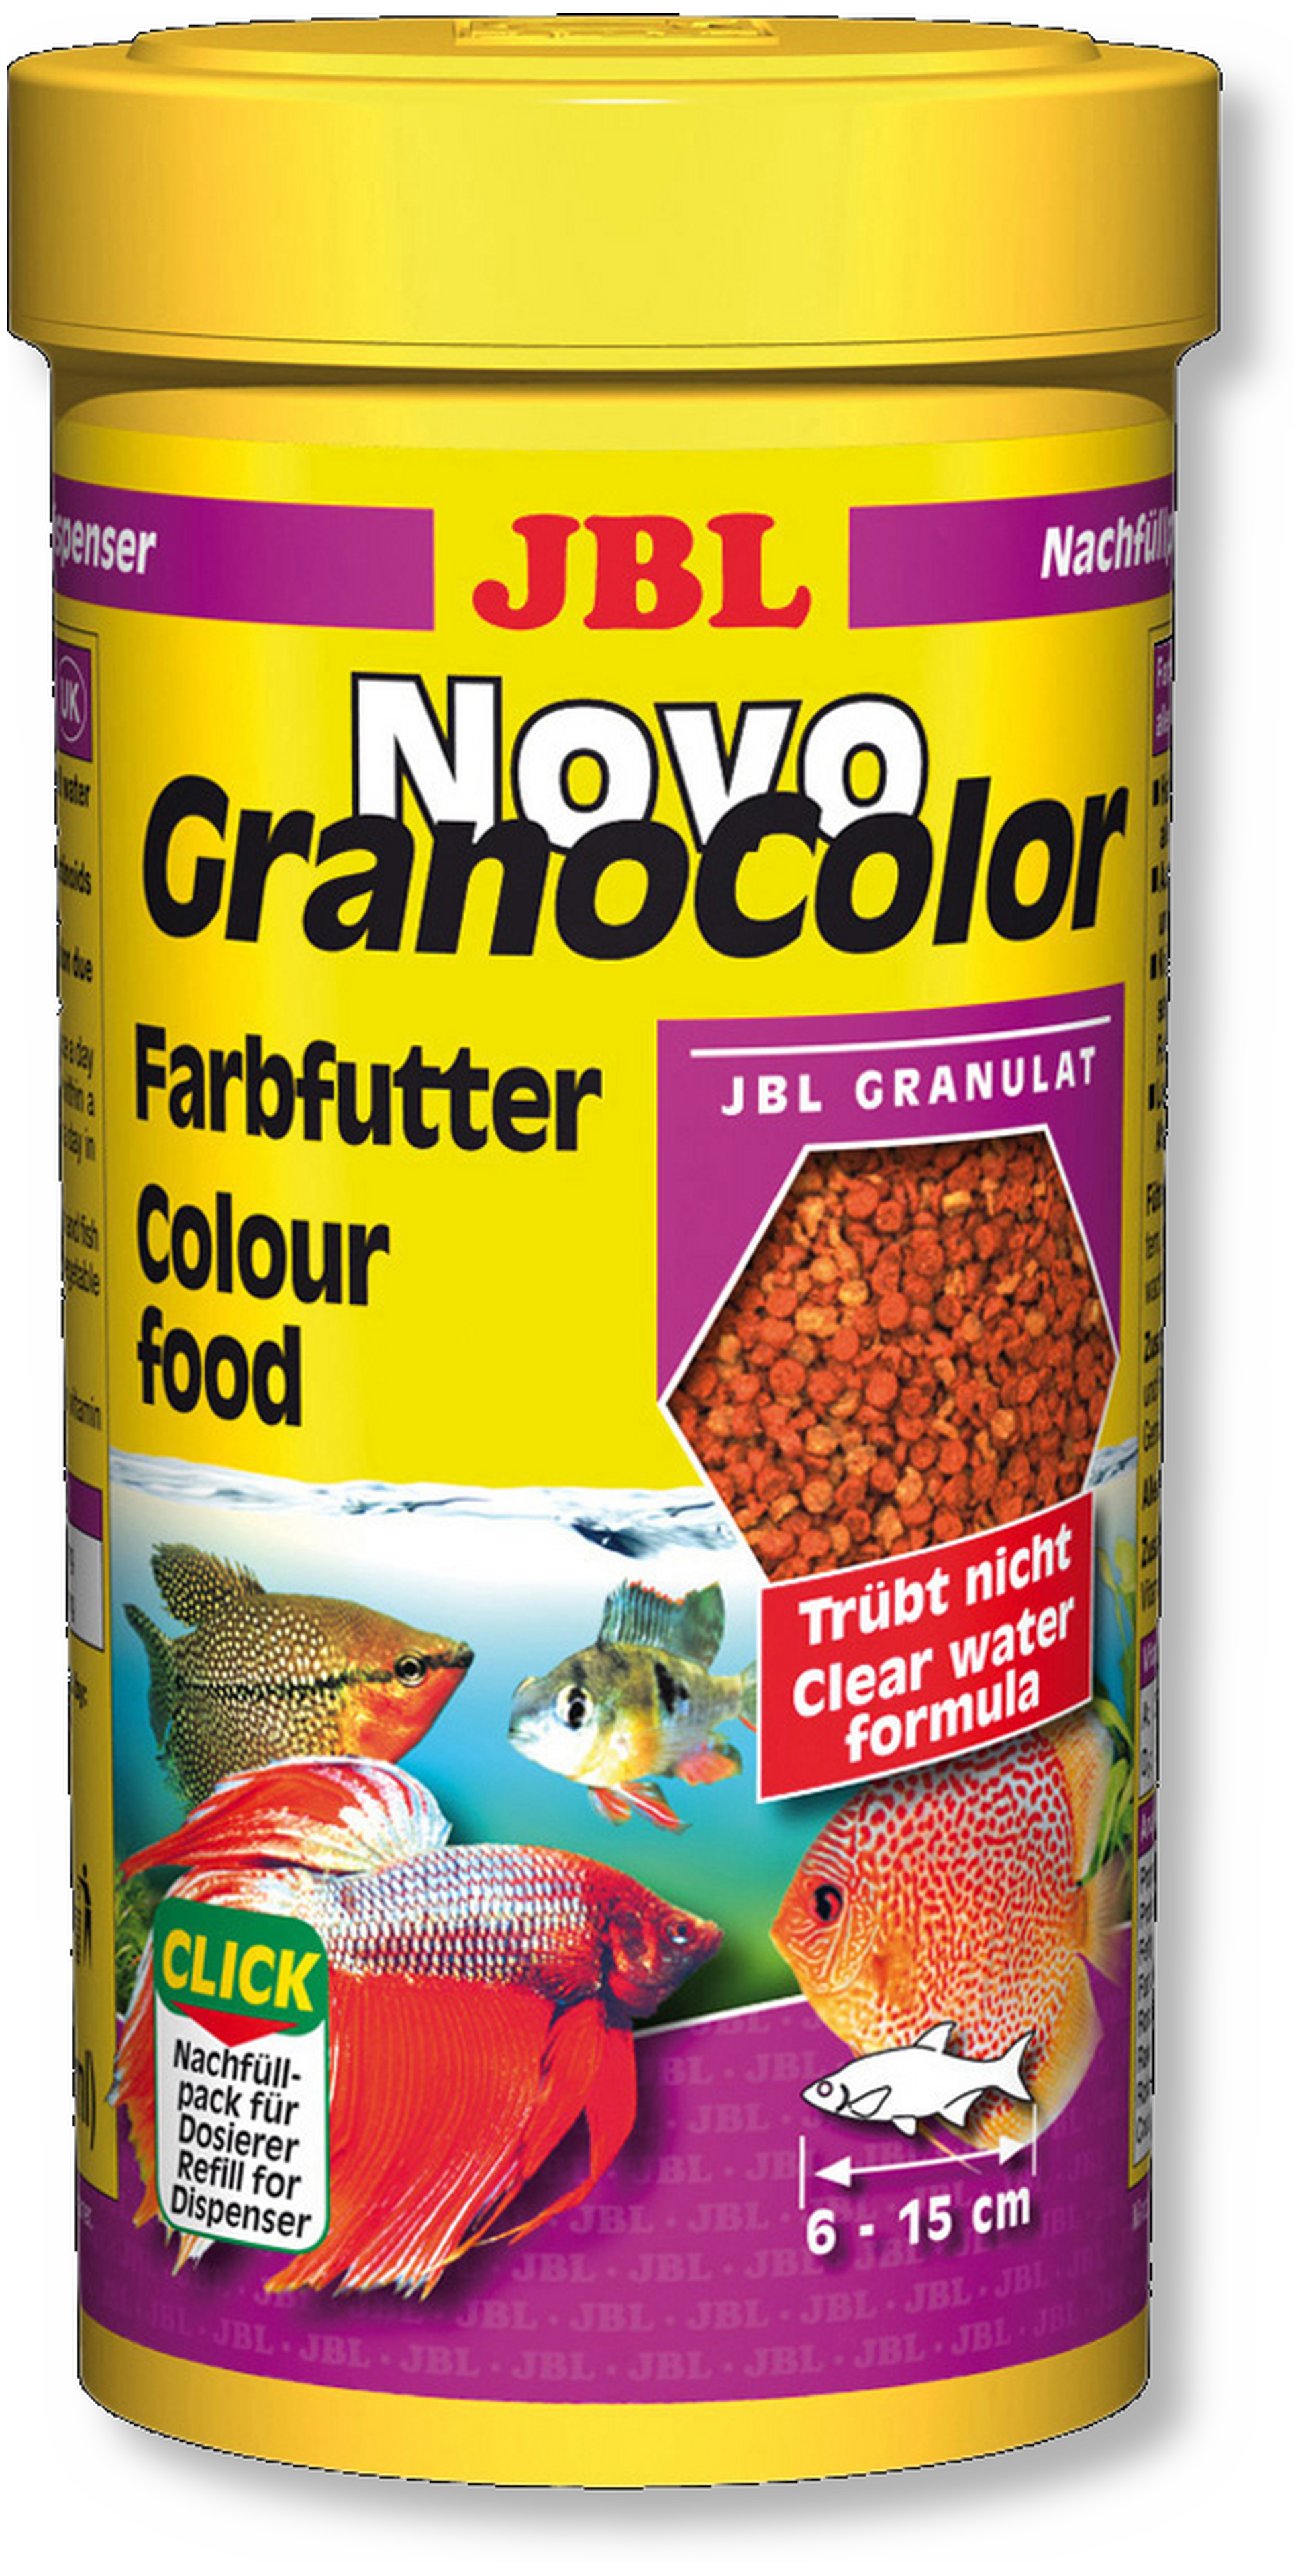 JBL NovoGranoMix XXS 100 ml nourriture en granulés pour petits poissons d' aquarium de 1 à 3 cm - Nourritures eau douce/Nourriture pour poissons  tropicaux -  - Aquariophilie